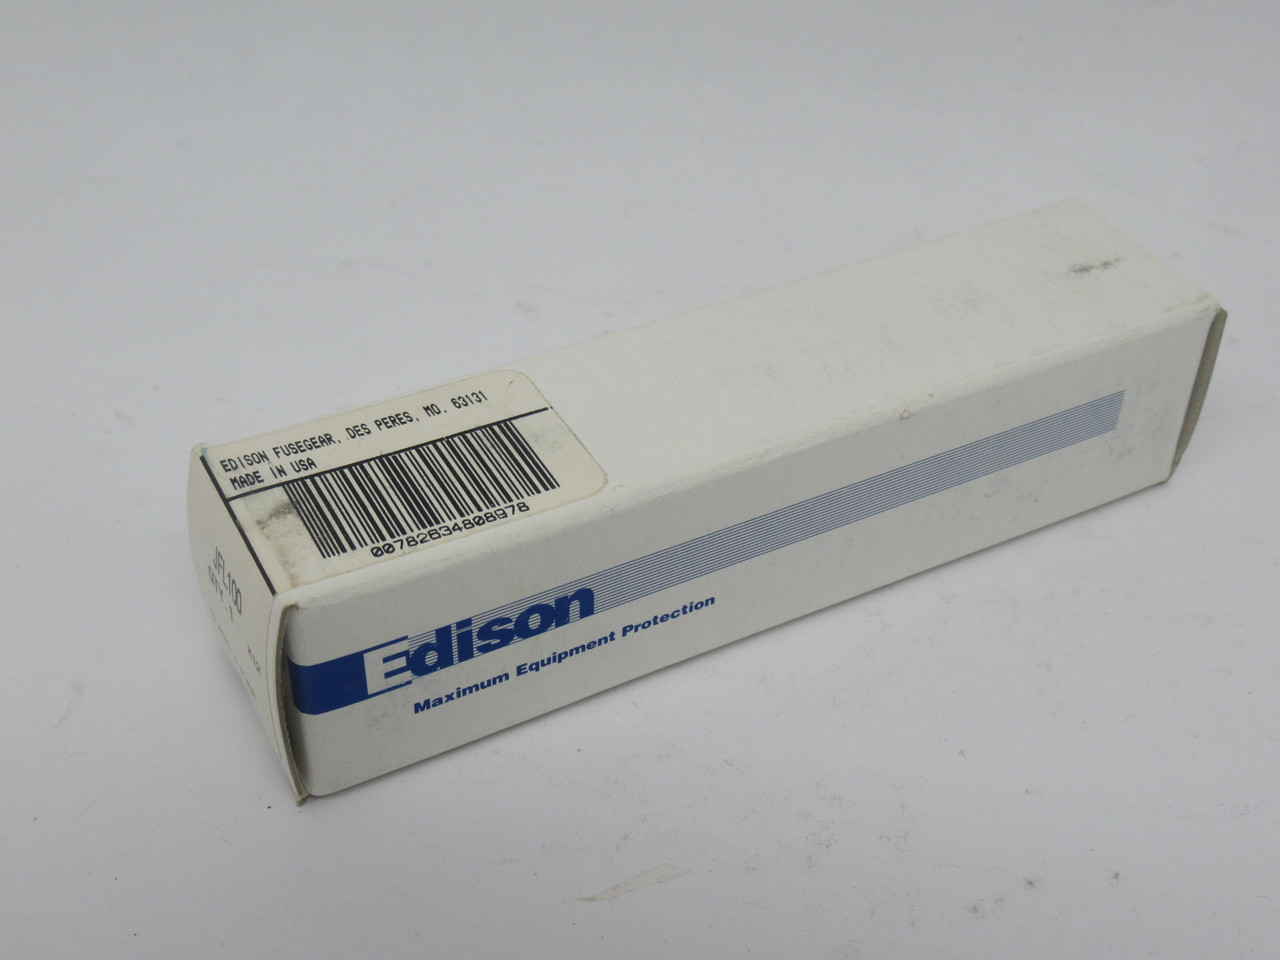 Edison JFL100 Fast Acting Current Limiting Fuse 100A 600VAC NEW